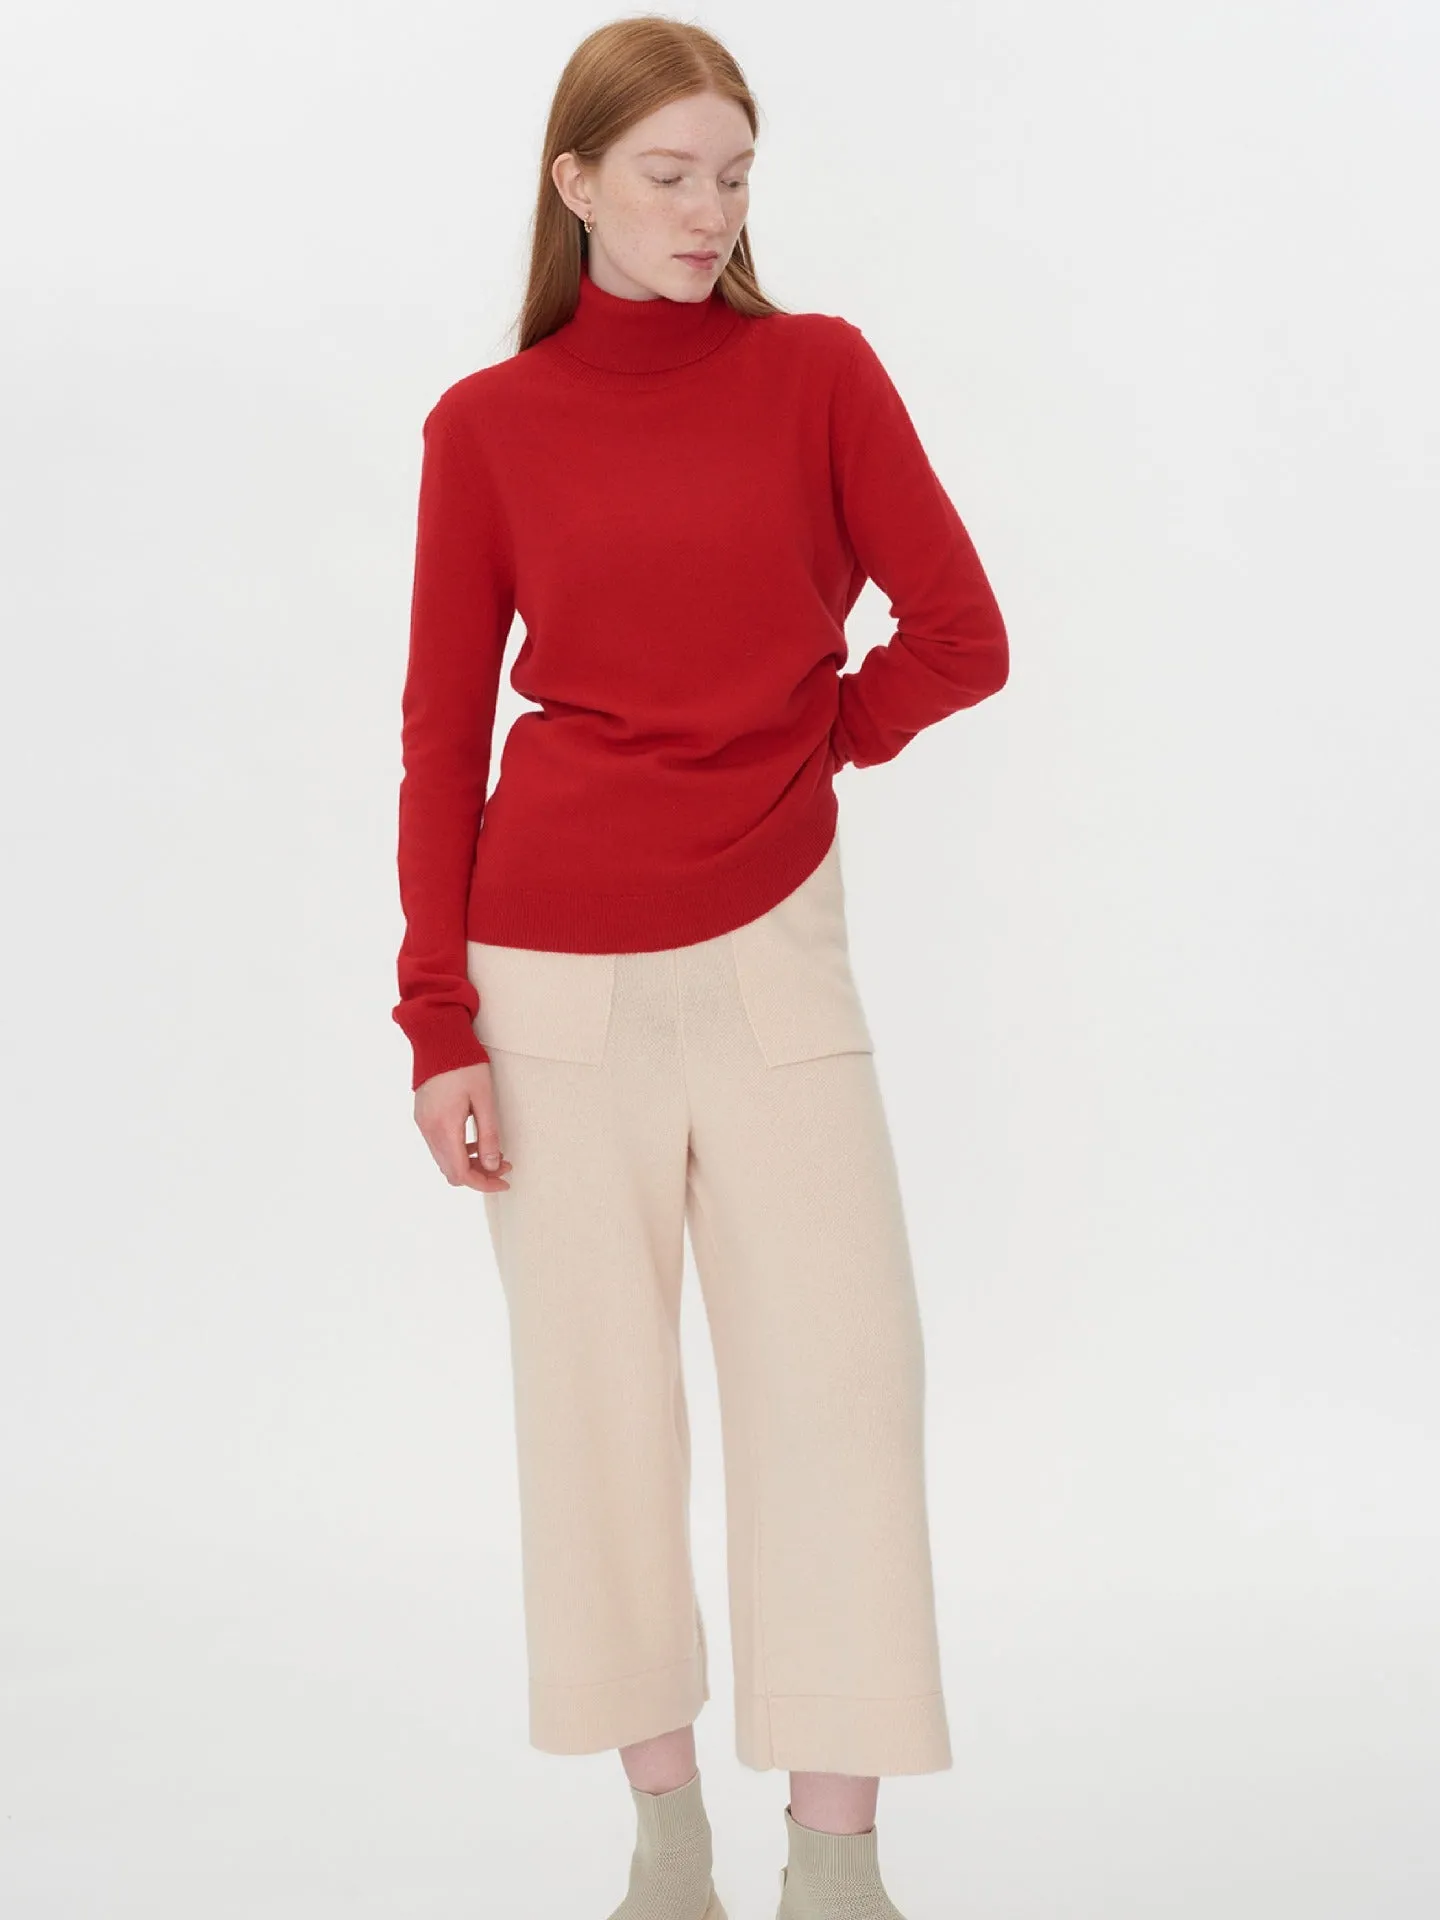 Women's Cashmere Basic Turtle Neck Sweater Red - Gobi Cashmere